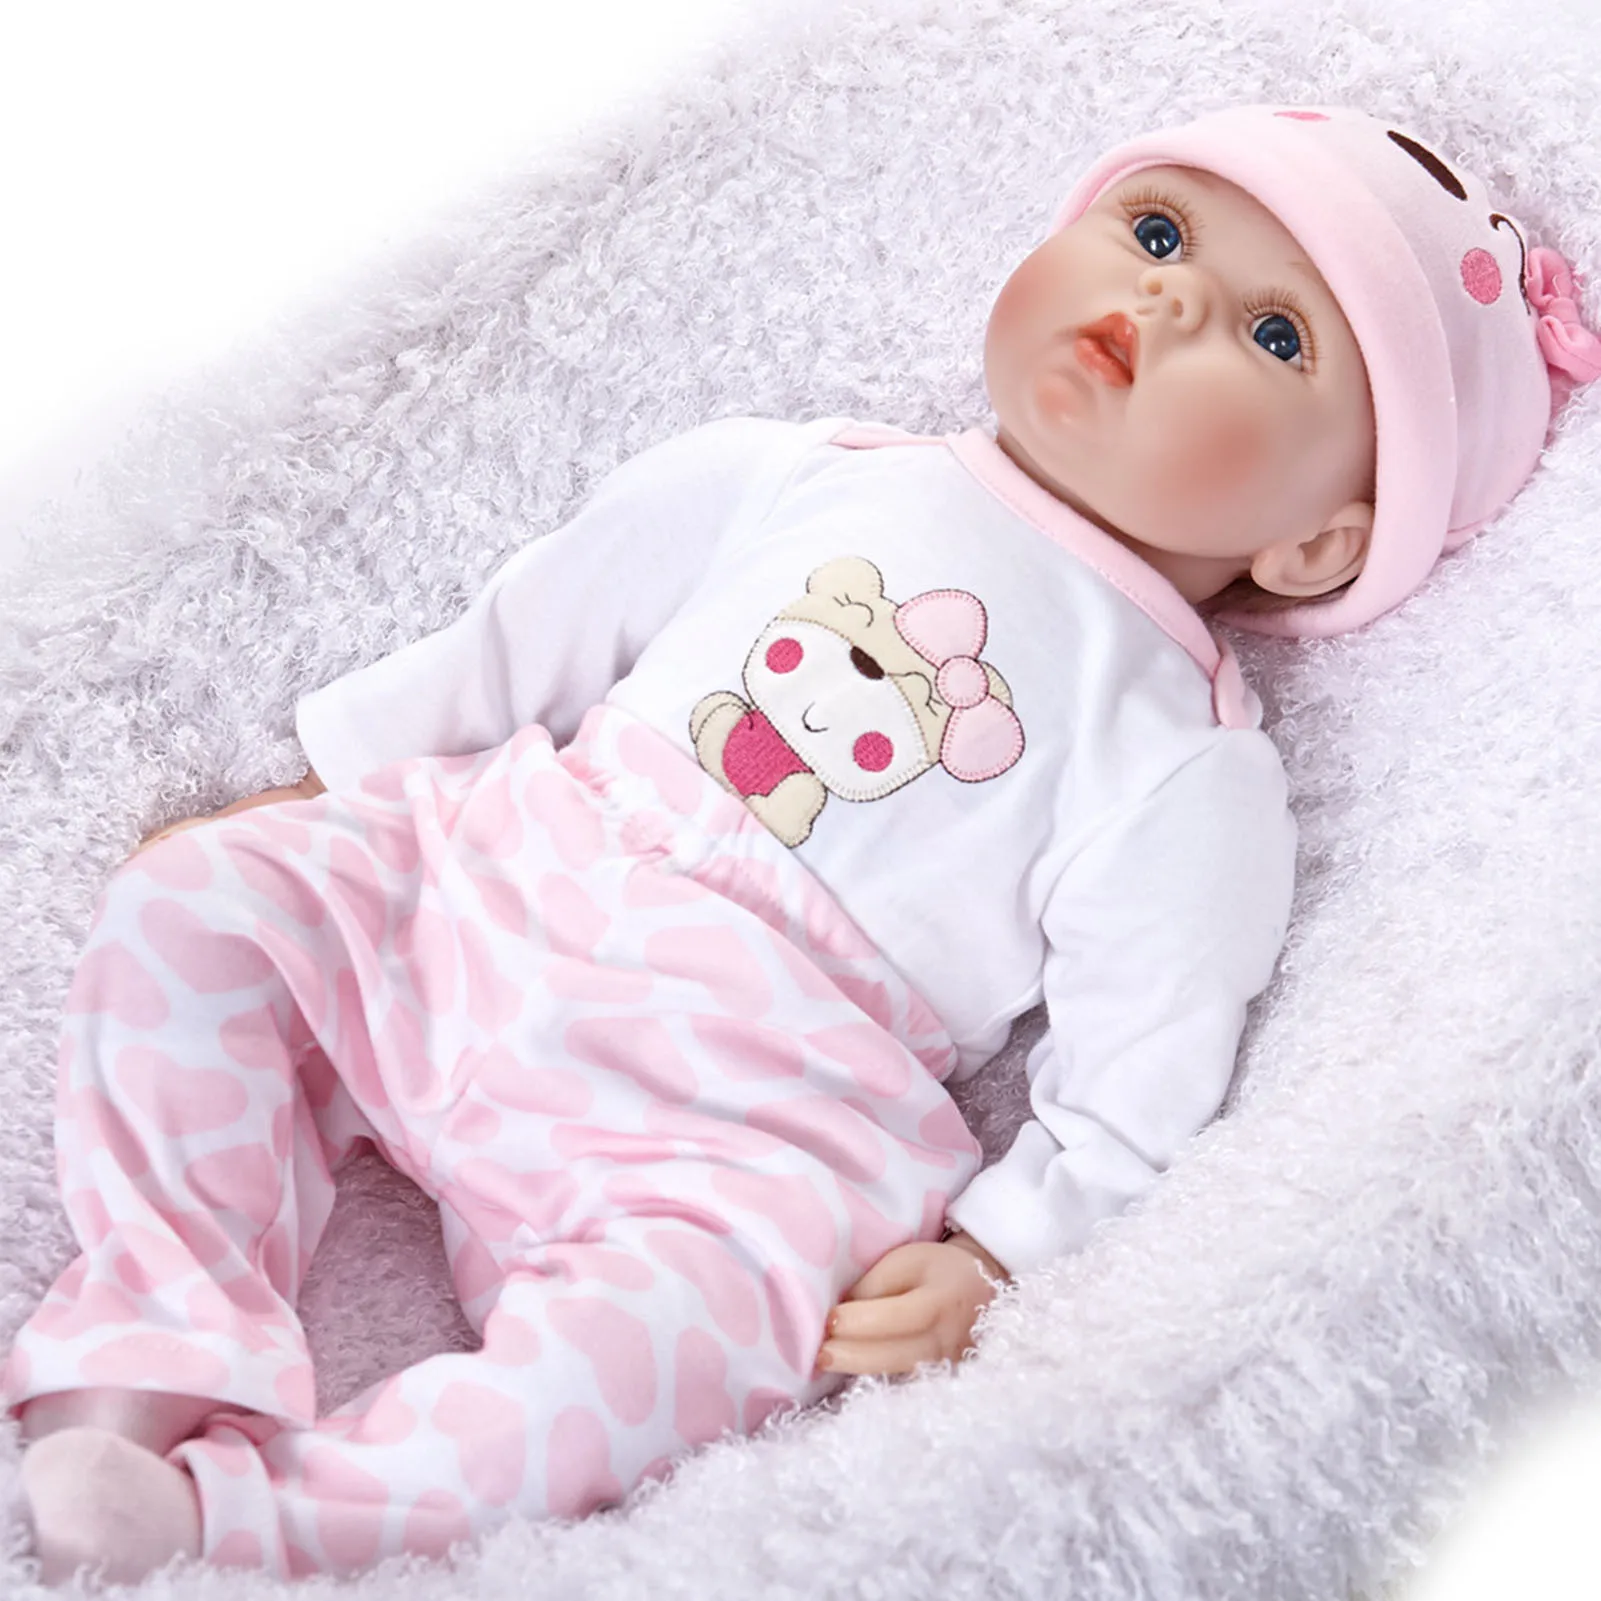 

22 Inch Baby Toys Kids Infant Toddler Lifelike Reborn Baby Doll 42cm 55cm Newborn Doll Kids Girl Playmate Birthday Gift for Baby